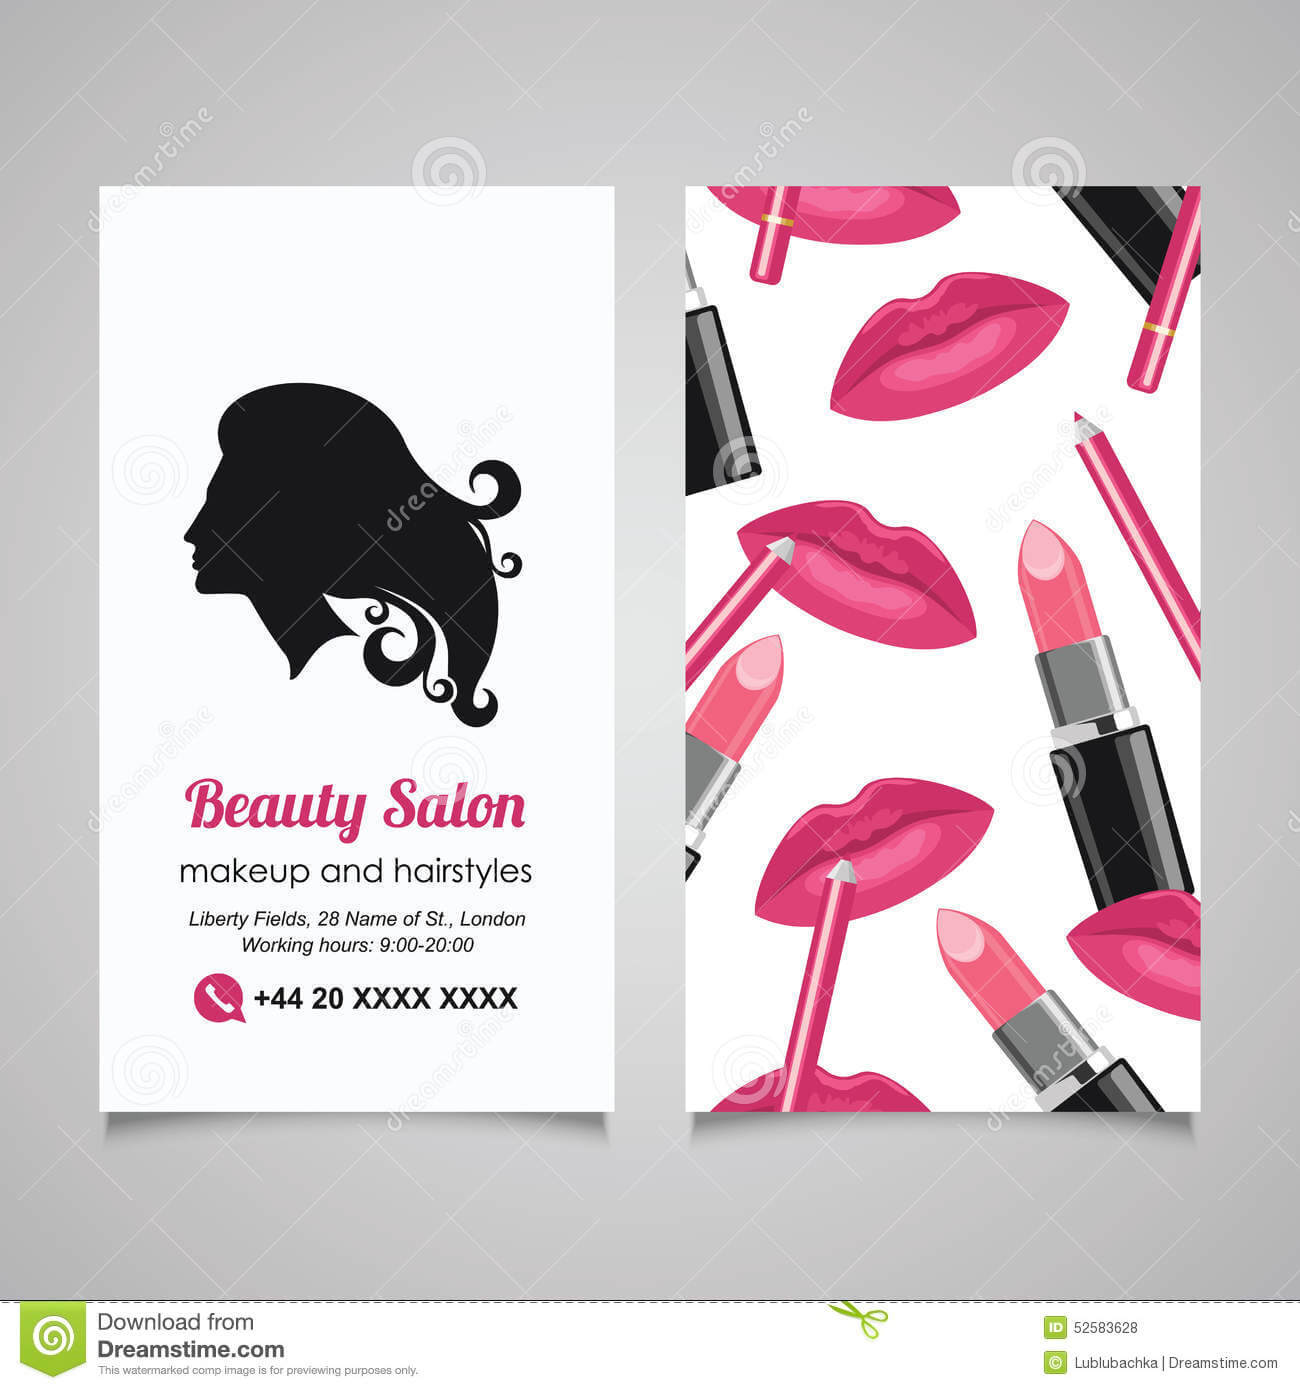 Beauty Salon Business Card Design Template With Beautiful Within Hair Salon Business Card Template